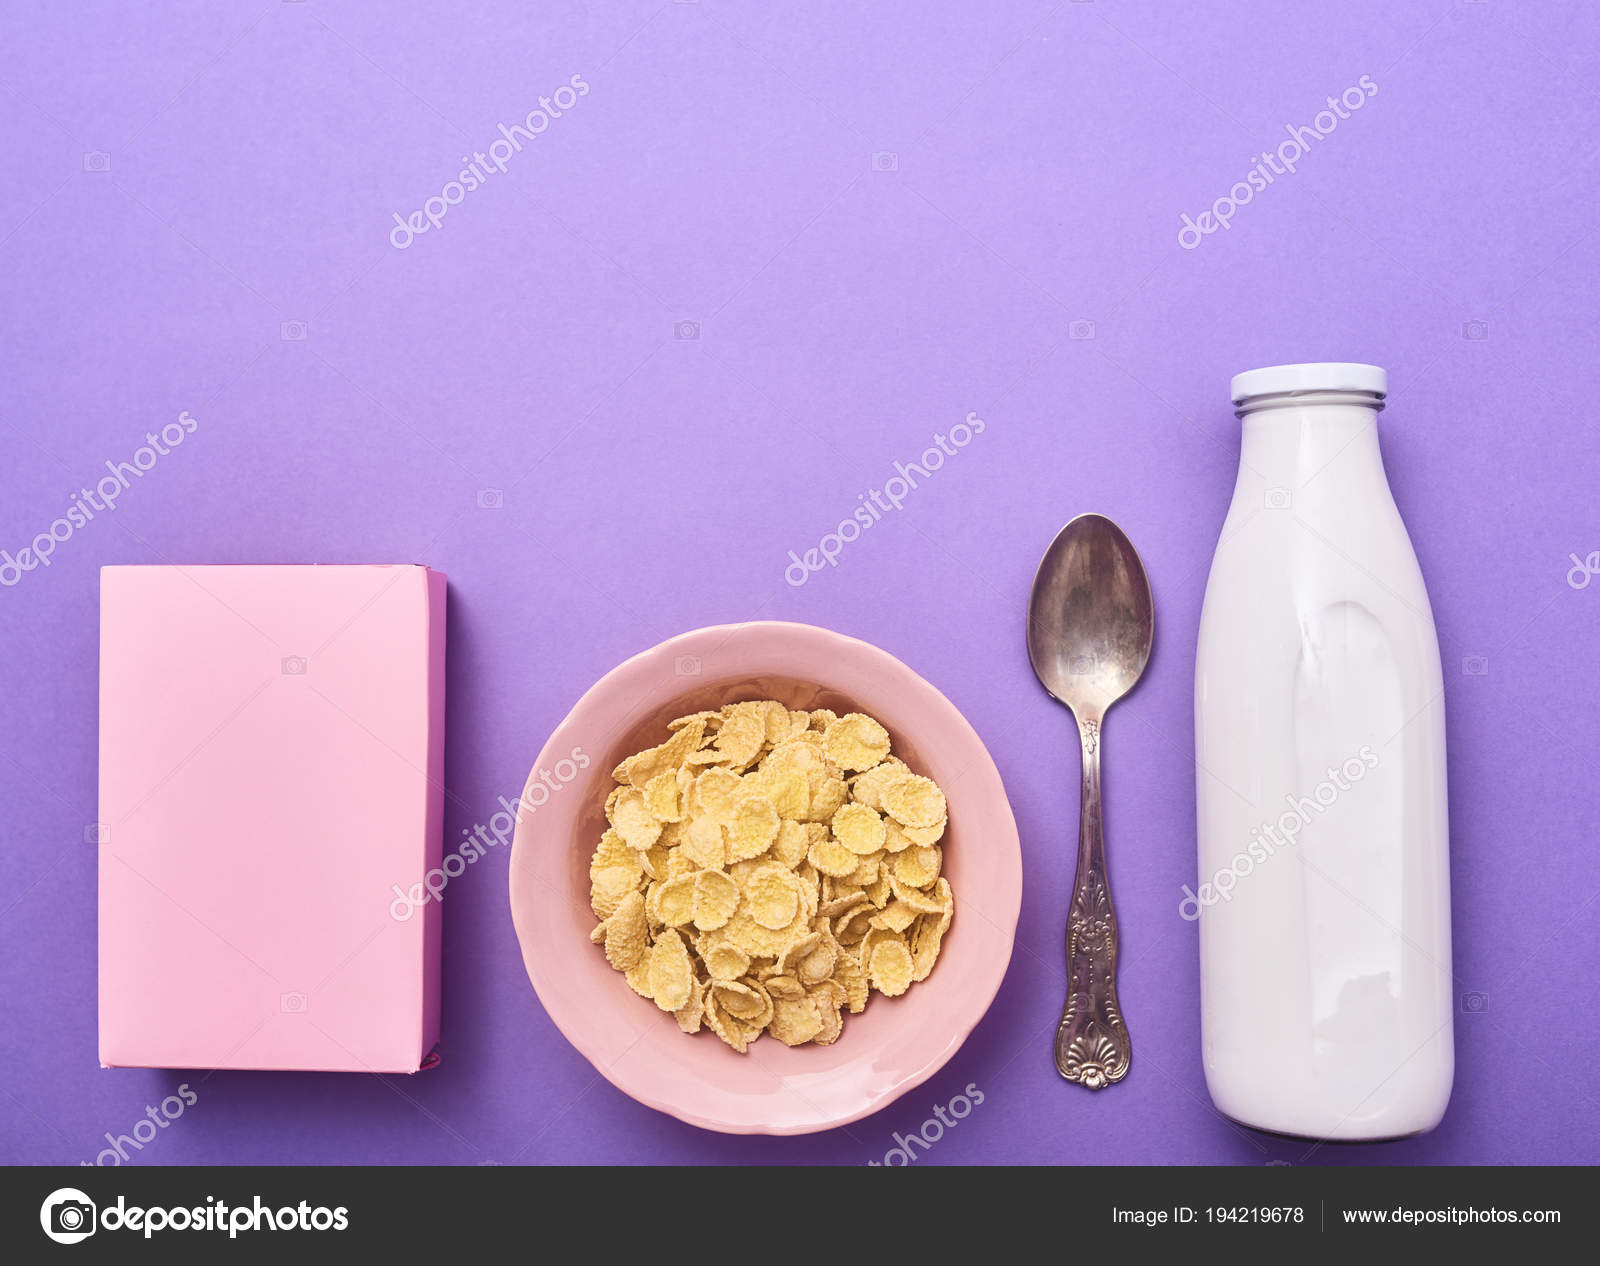 https://st3.depositphotos.com/14654838/19421/i/1600/depositphotos_194219678-stock-photo-cereals-pink-bowl-spoon-bottle.jpg